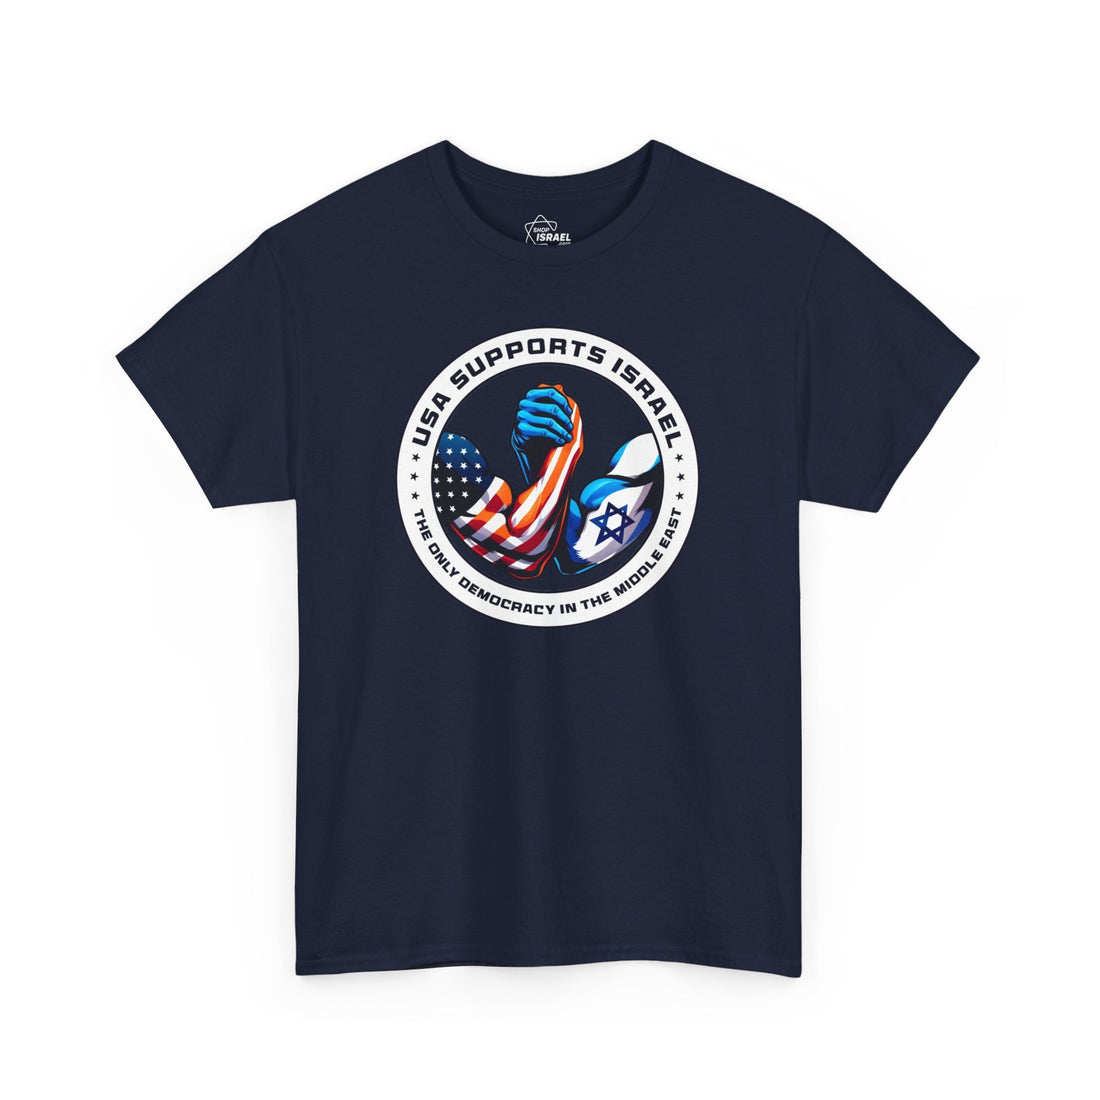 USA Supports Israel T-Shirt - Shop Israel